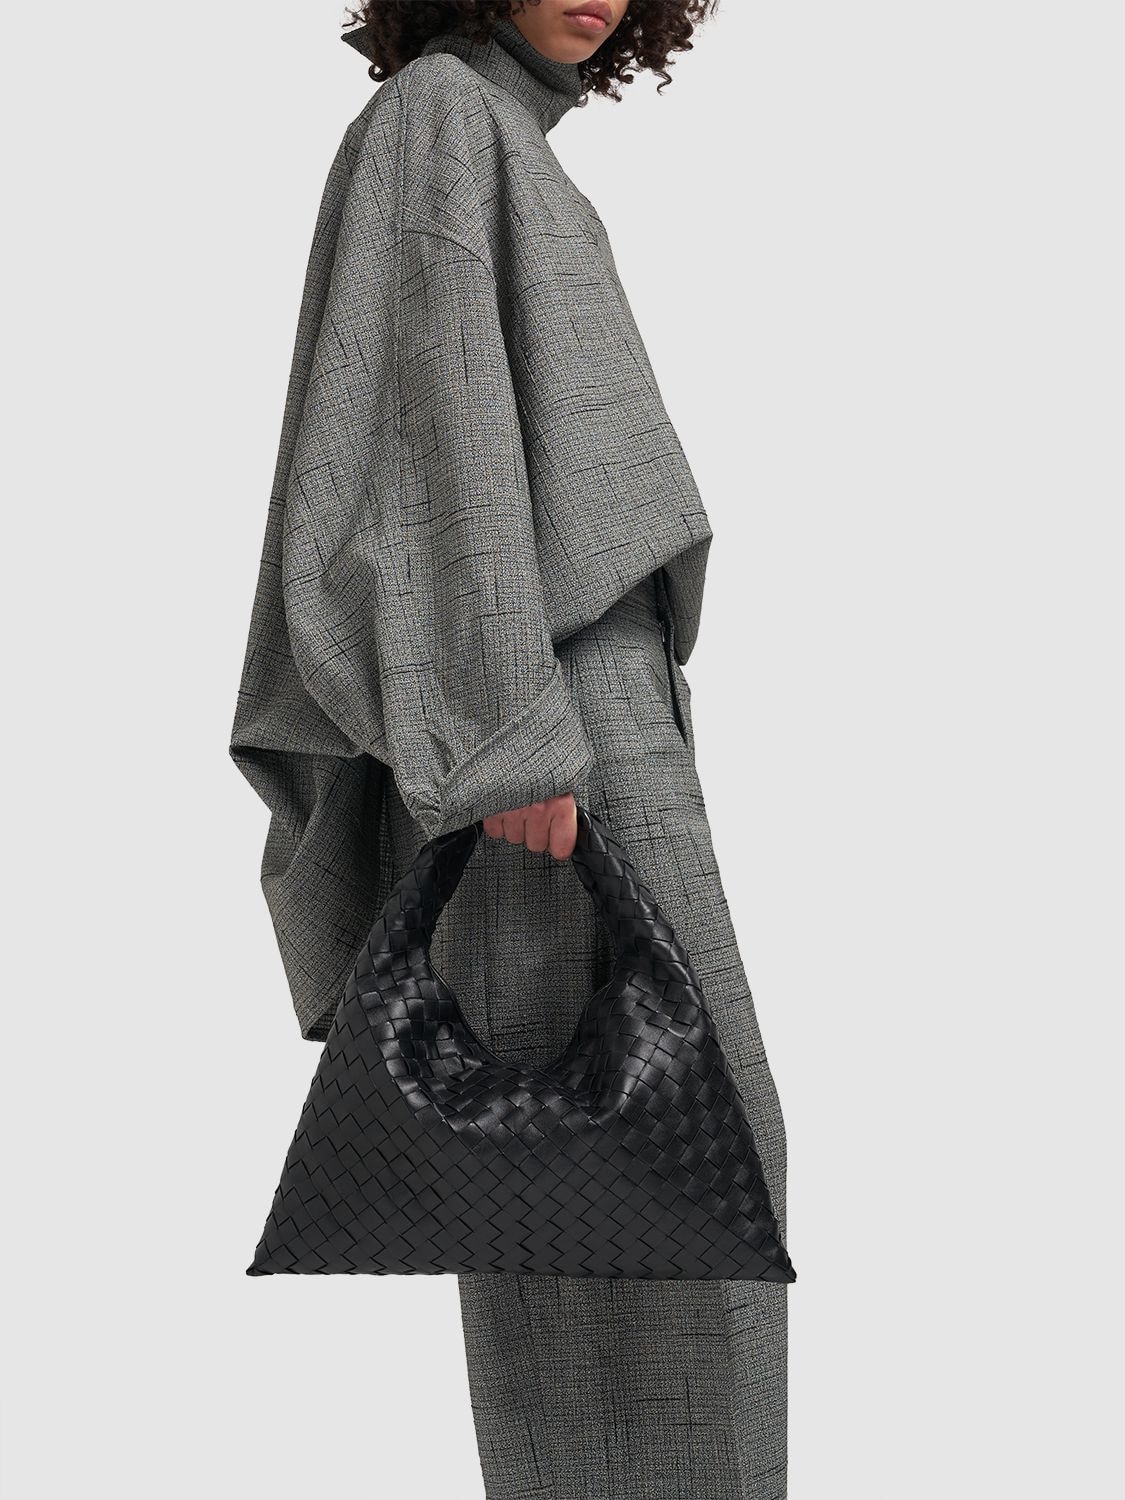 Polène | Bag - Béri with Chain - Black Textured Leather